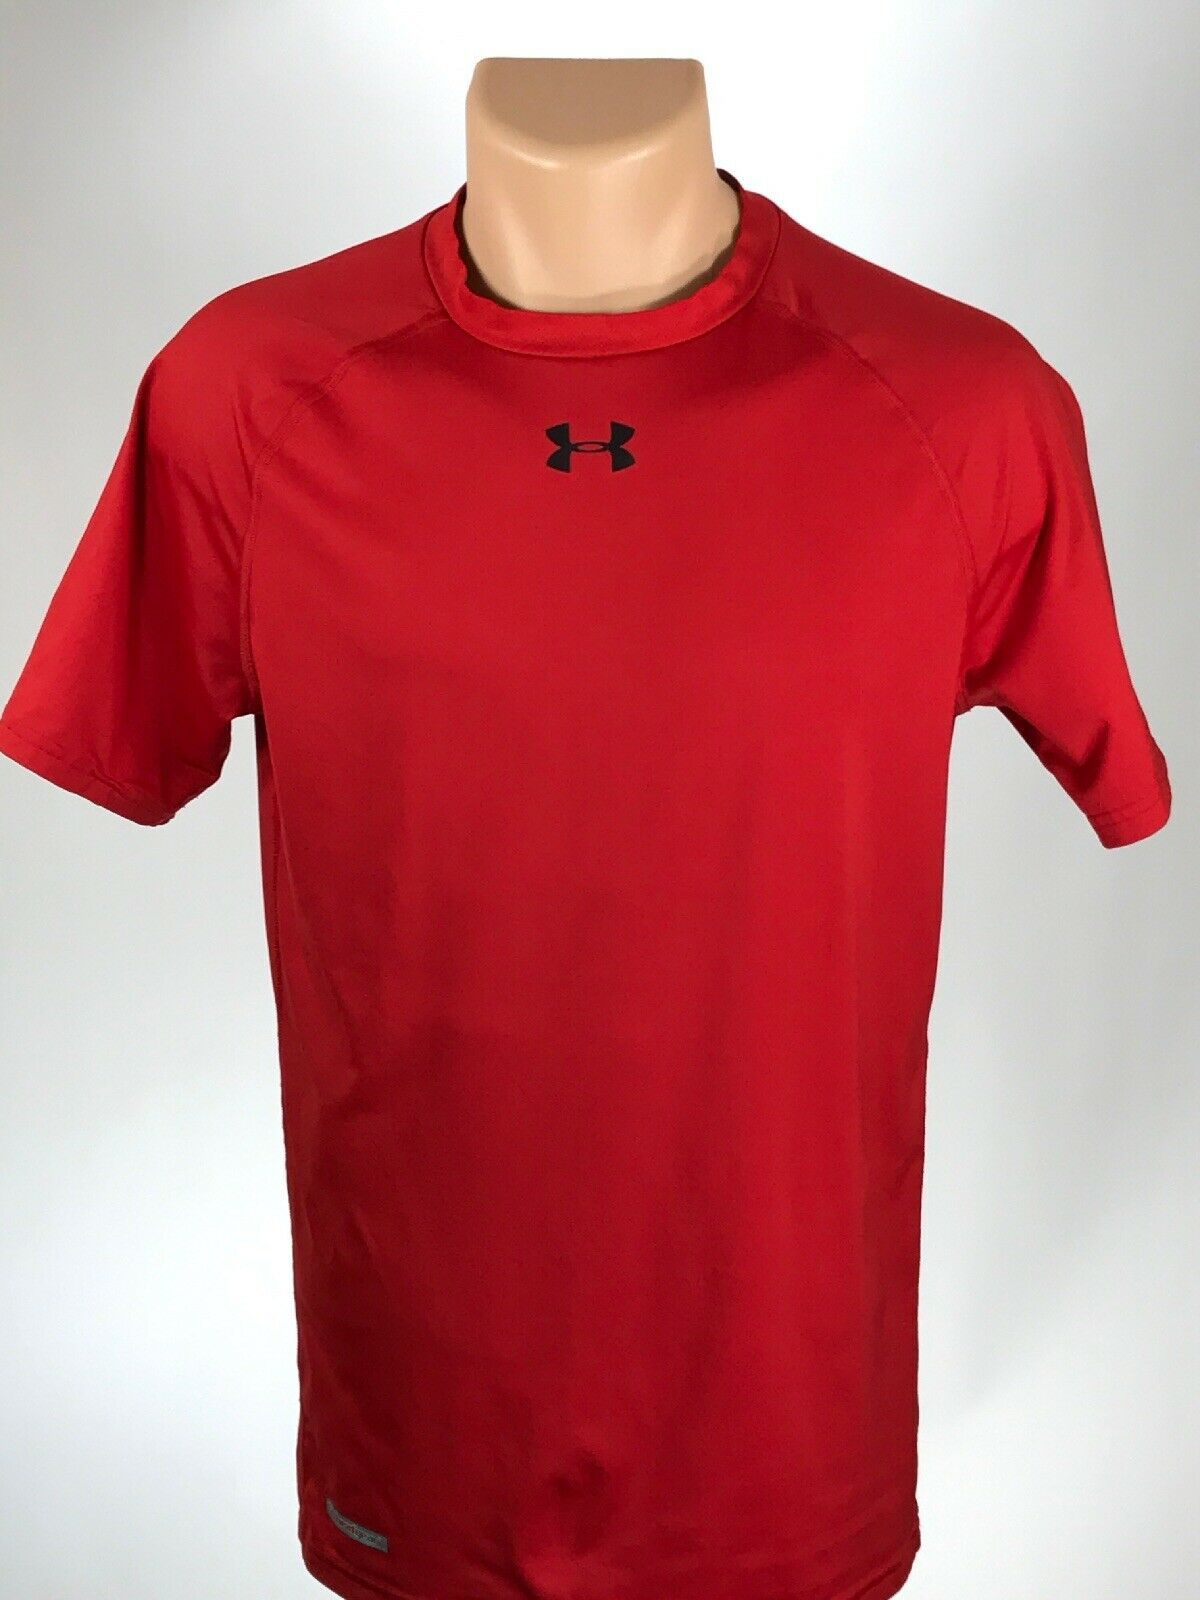 Under Armour XL Heatgear Compression Shirt Mens Size XL Red Short ...